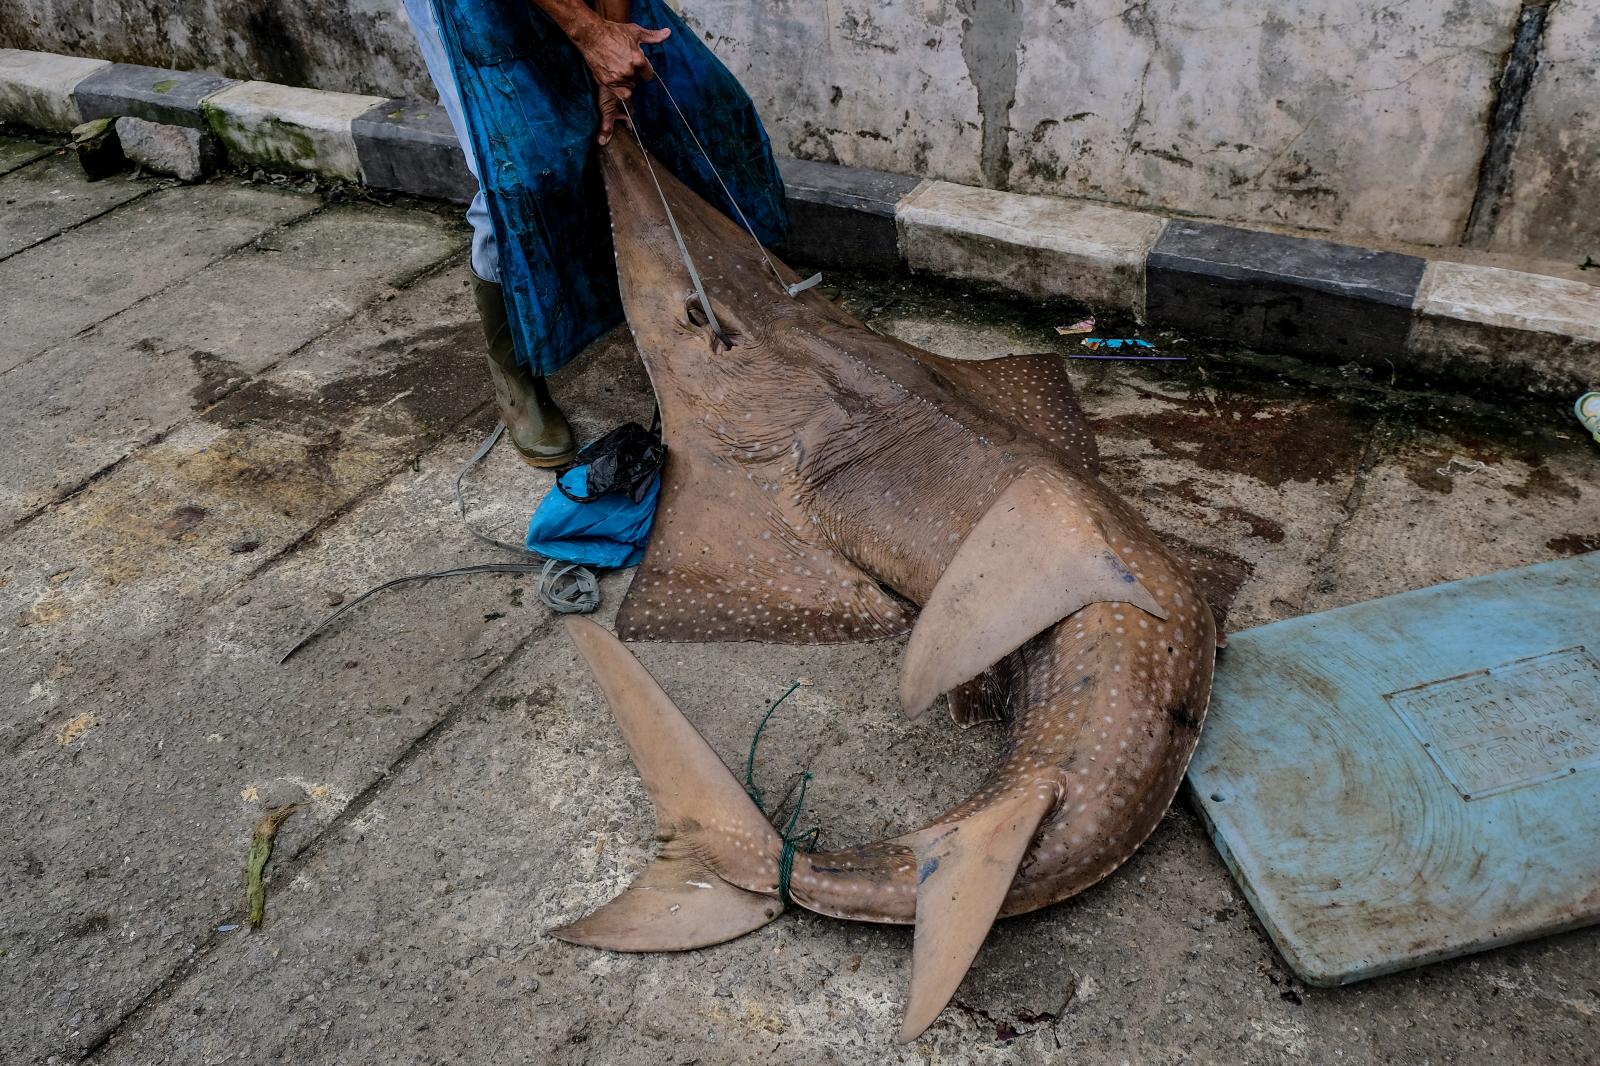 Shark Slaughter in Bangka Belitung Island, Indonesia | Buy this image